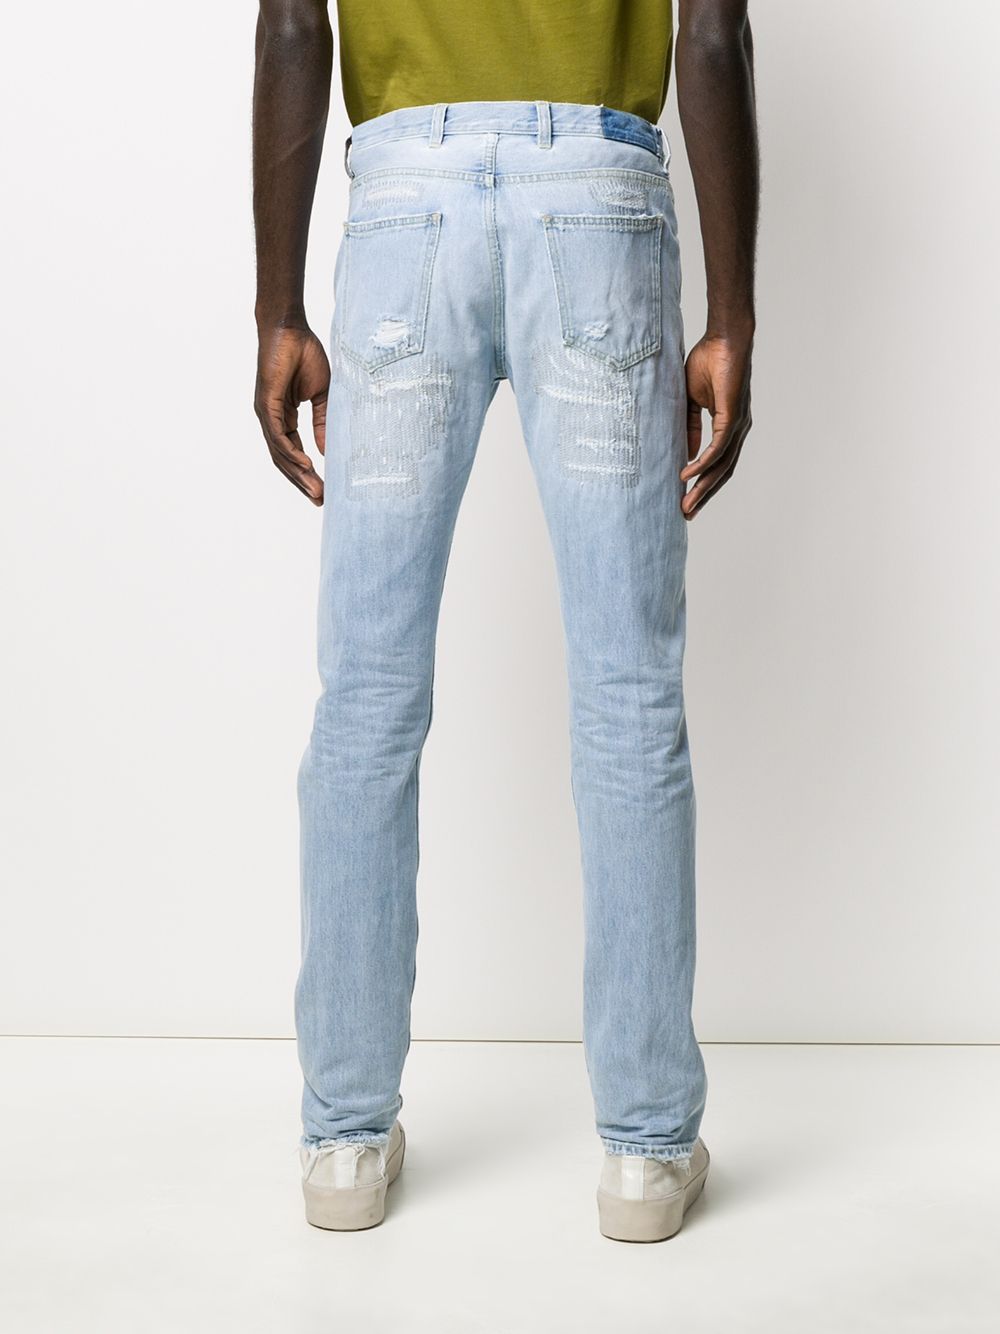 фото Eleventy джинсы стандартного кроя